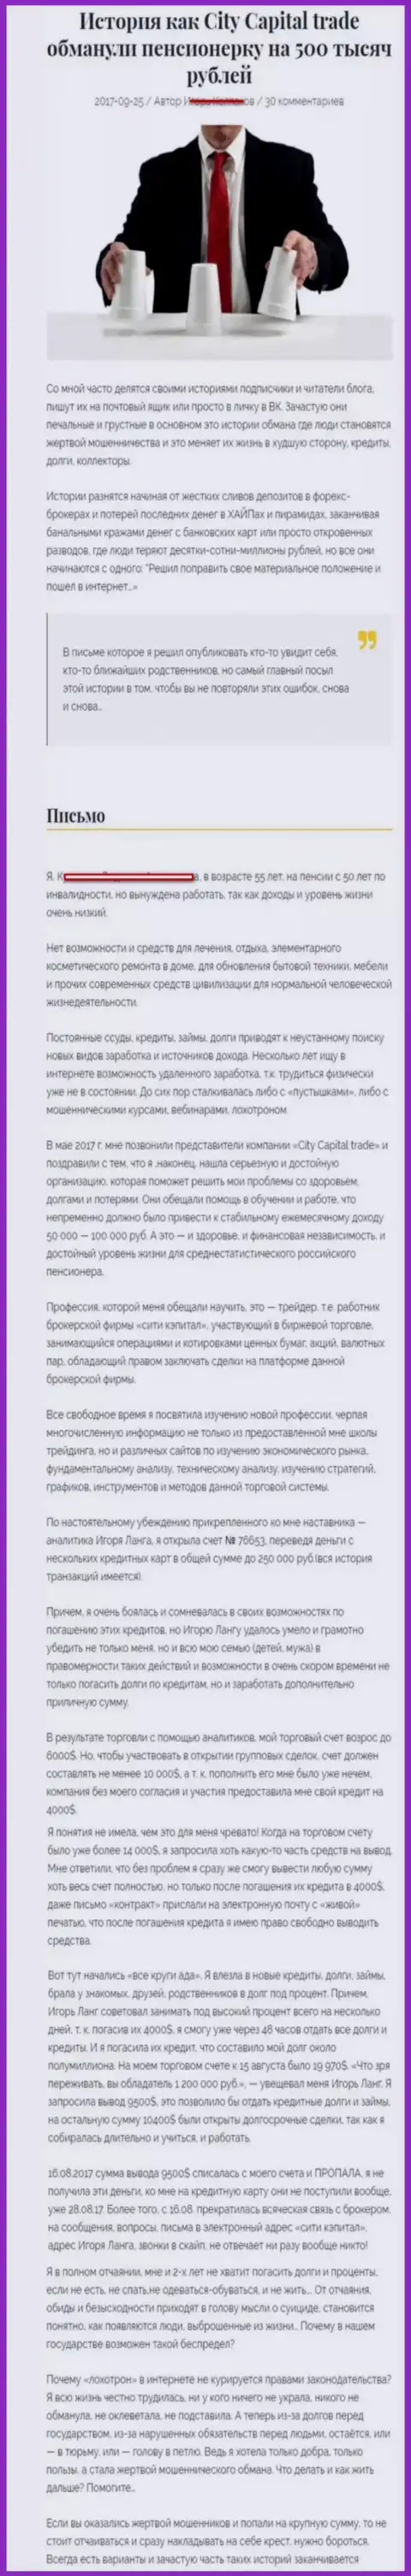 Велламо Холдинг Корп обули клиентку пенсионного возраста - инвалида на 500 000 рублей - FOREX КУХНЯ !!!